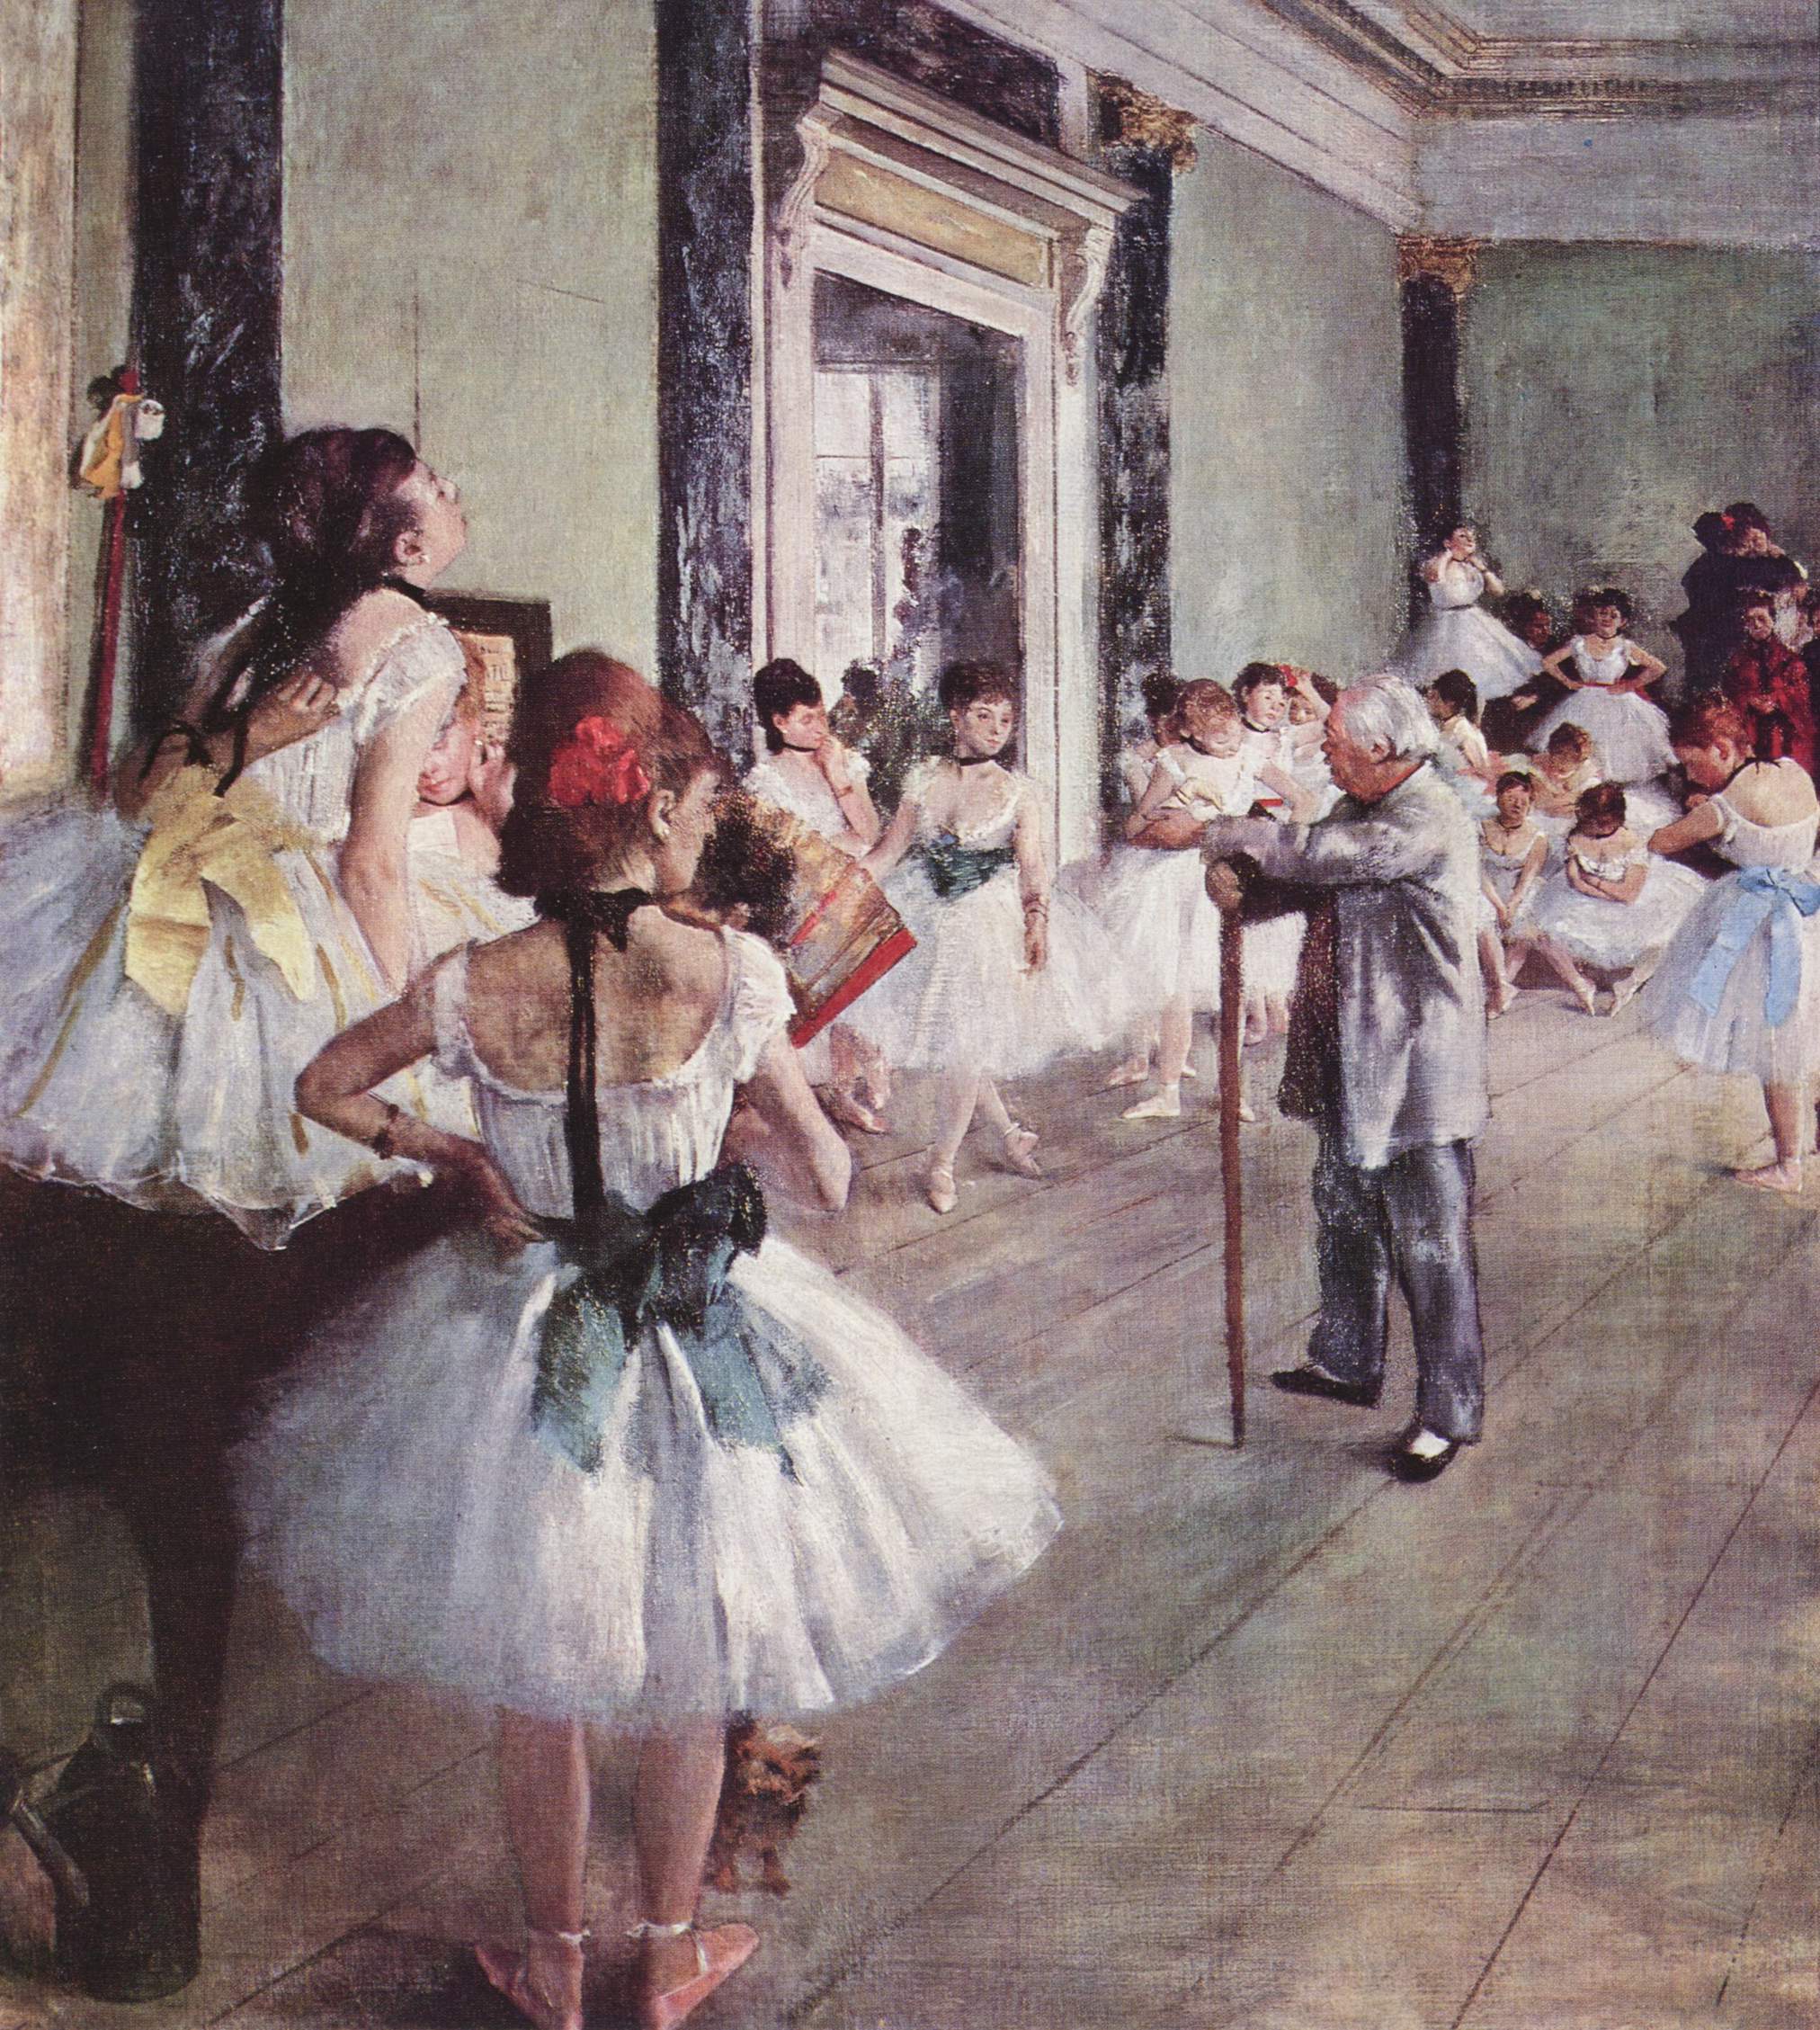 Tanzstunde by Edgar Degas - 1875 - 85 × 75 cm Musée d'Orsay